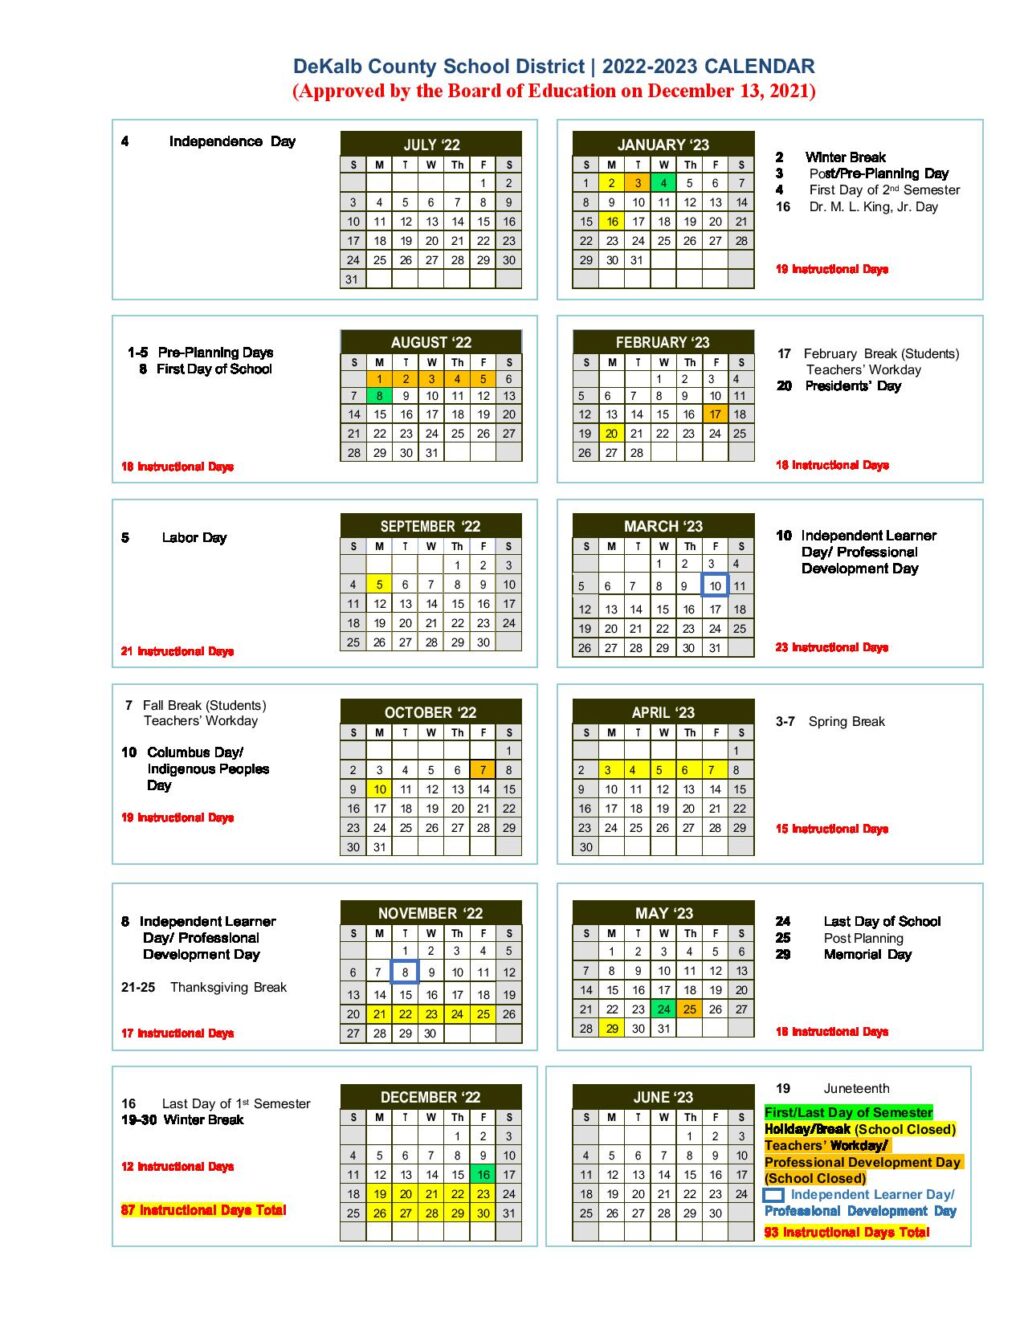 dekalb-county-school-district-calendar-holidays-2022-2023